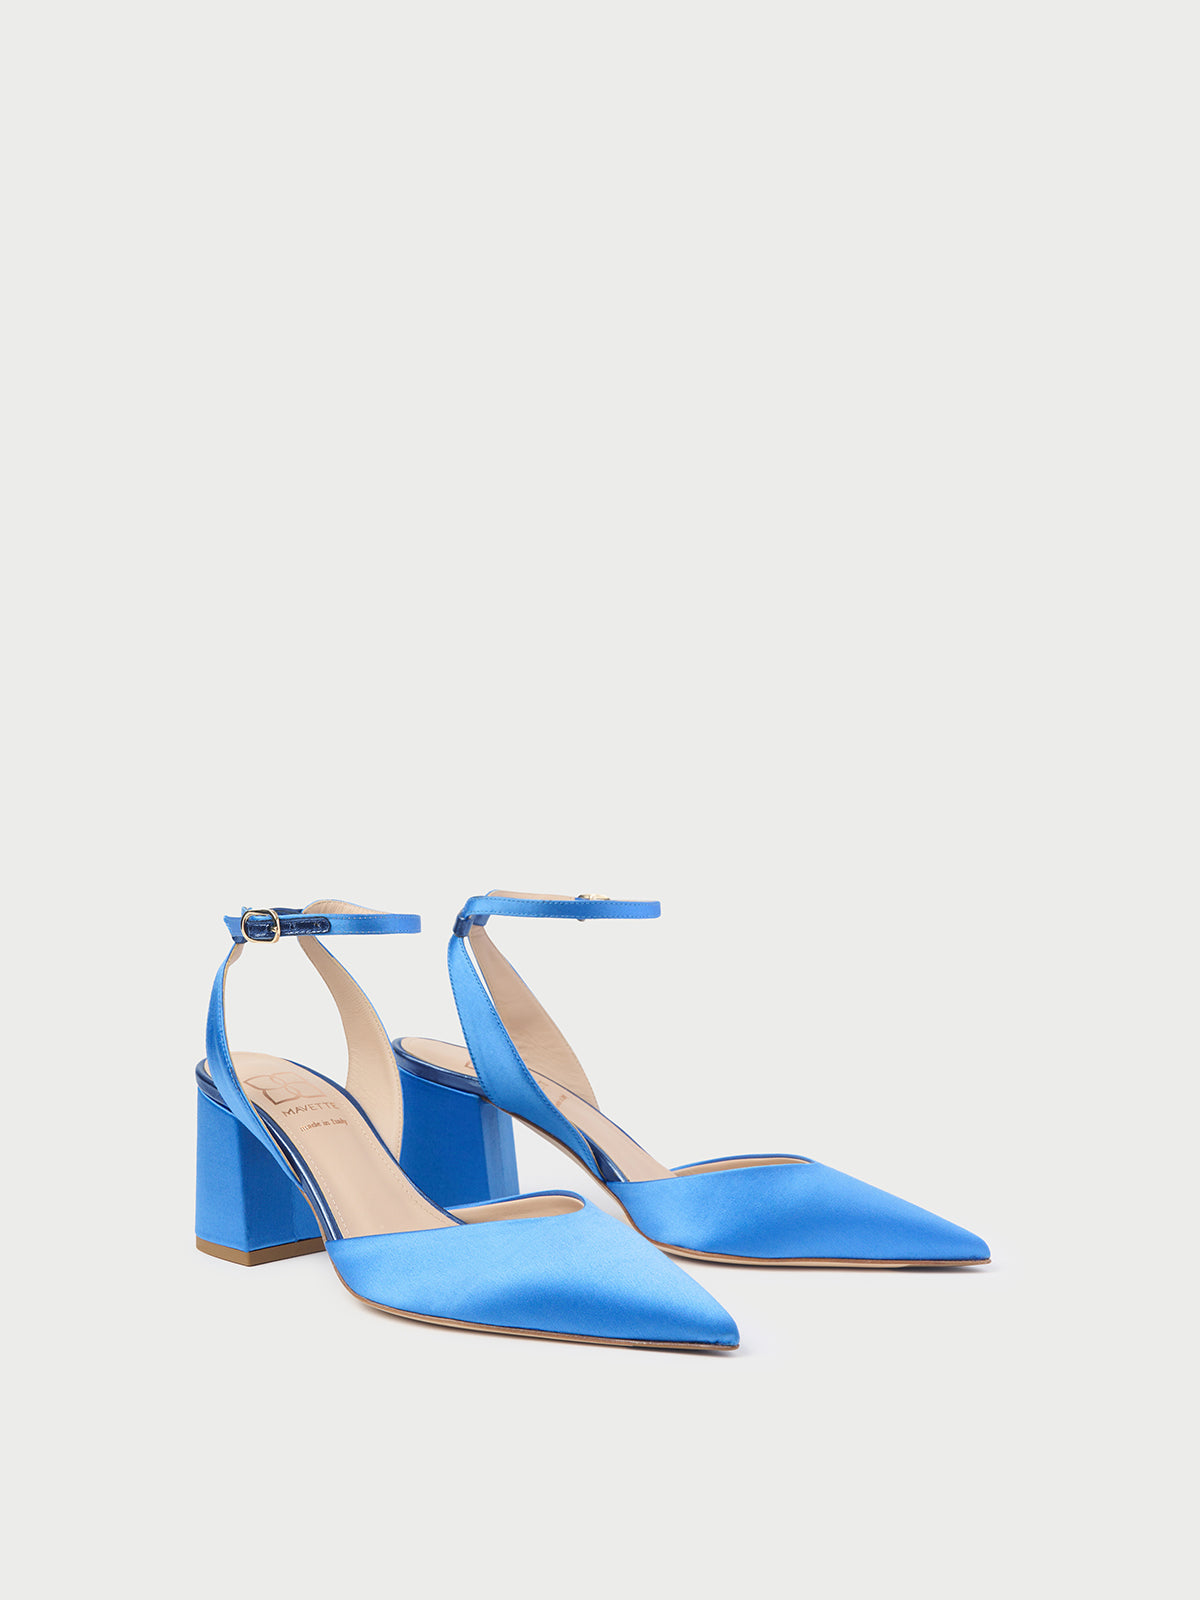 Shop Aurora Pump Blue Satin | Mavette Shoes Handmade in Italy